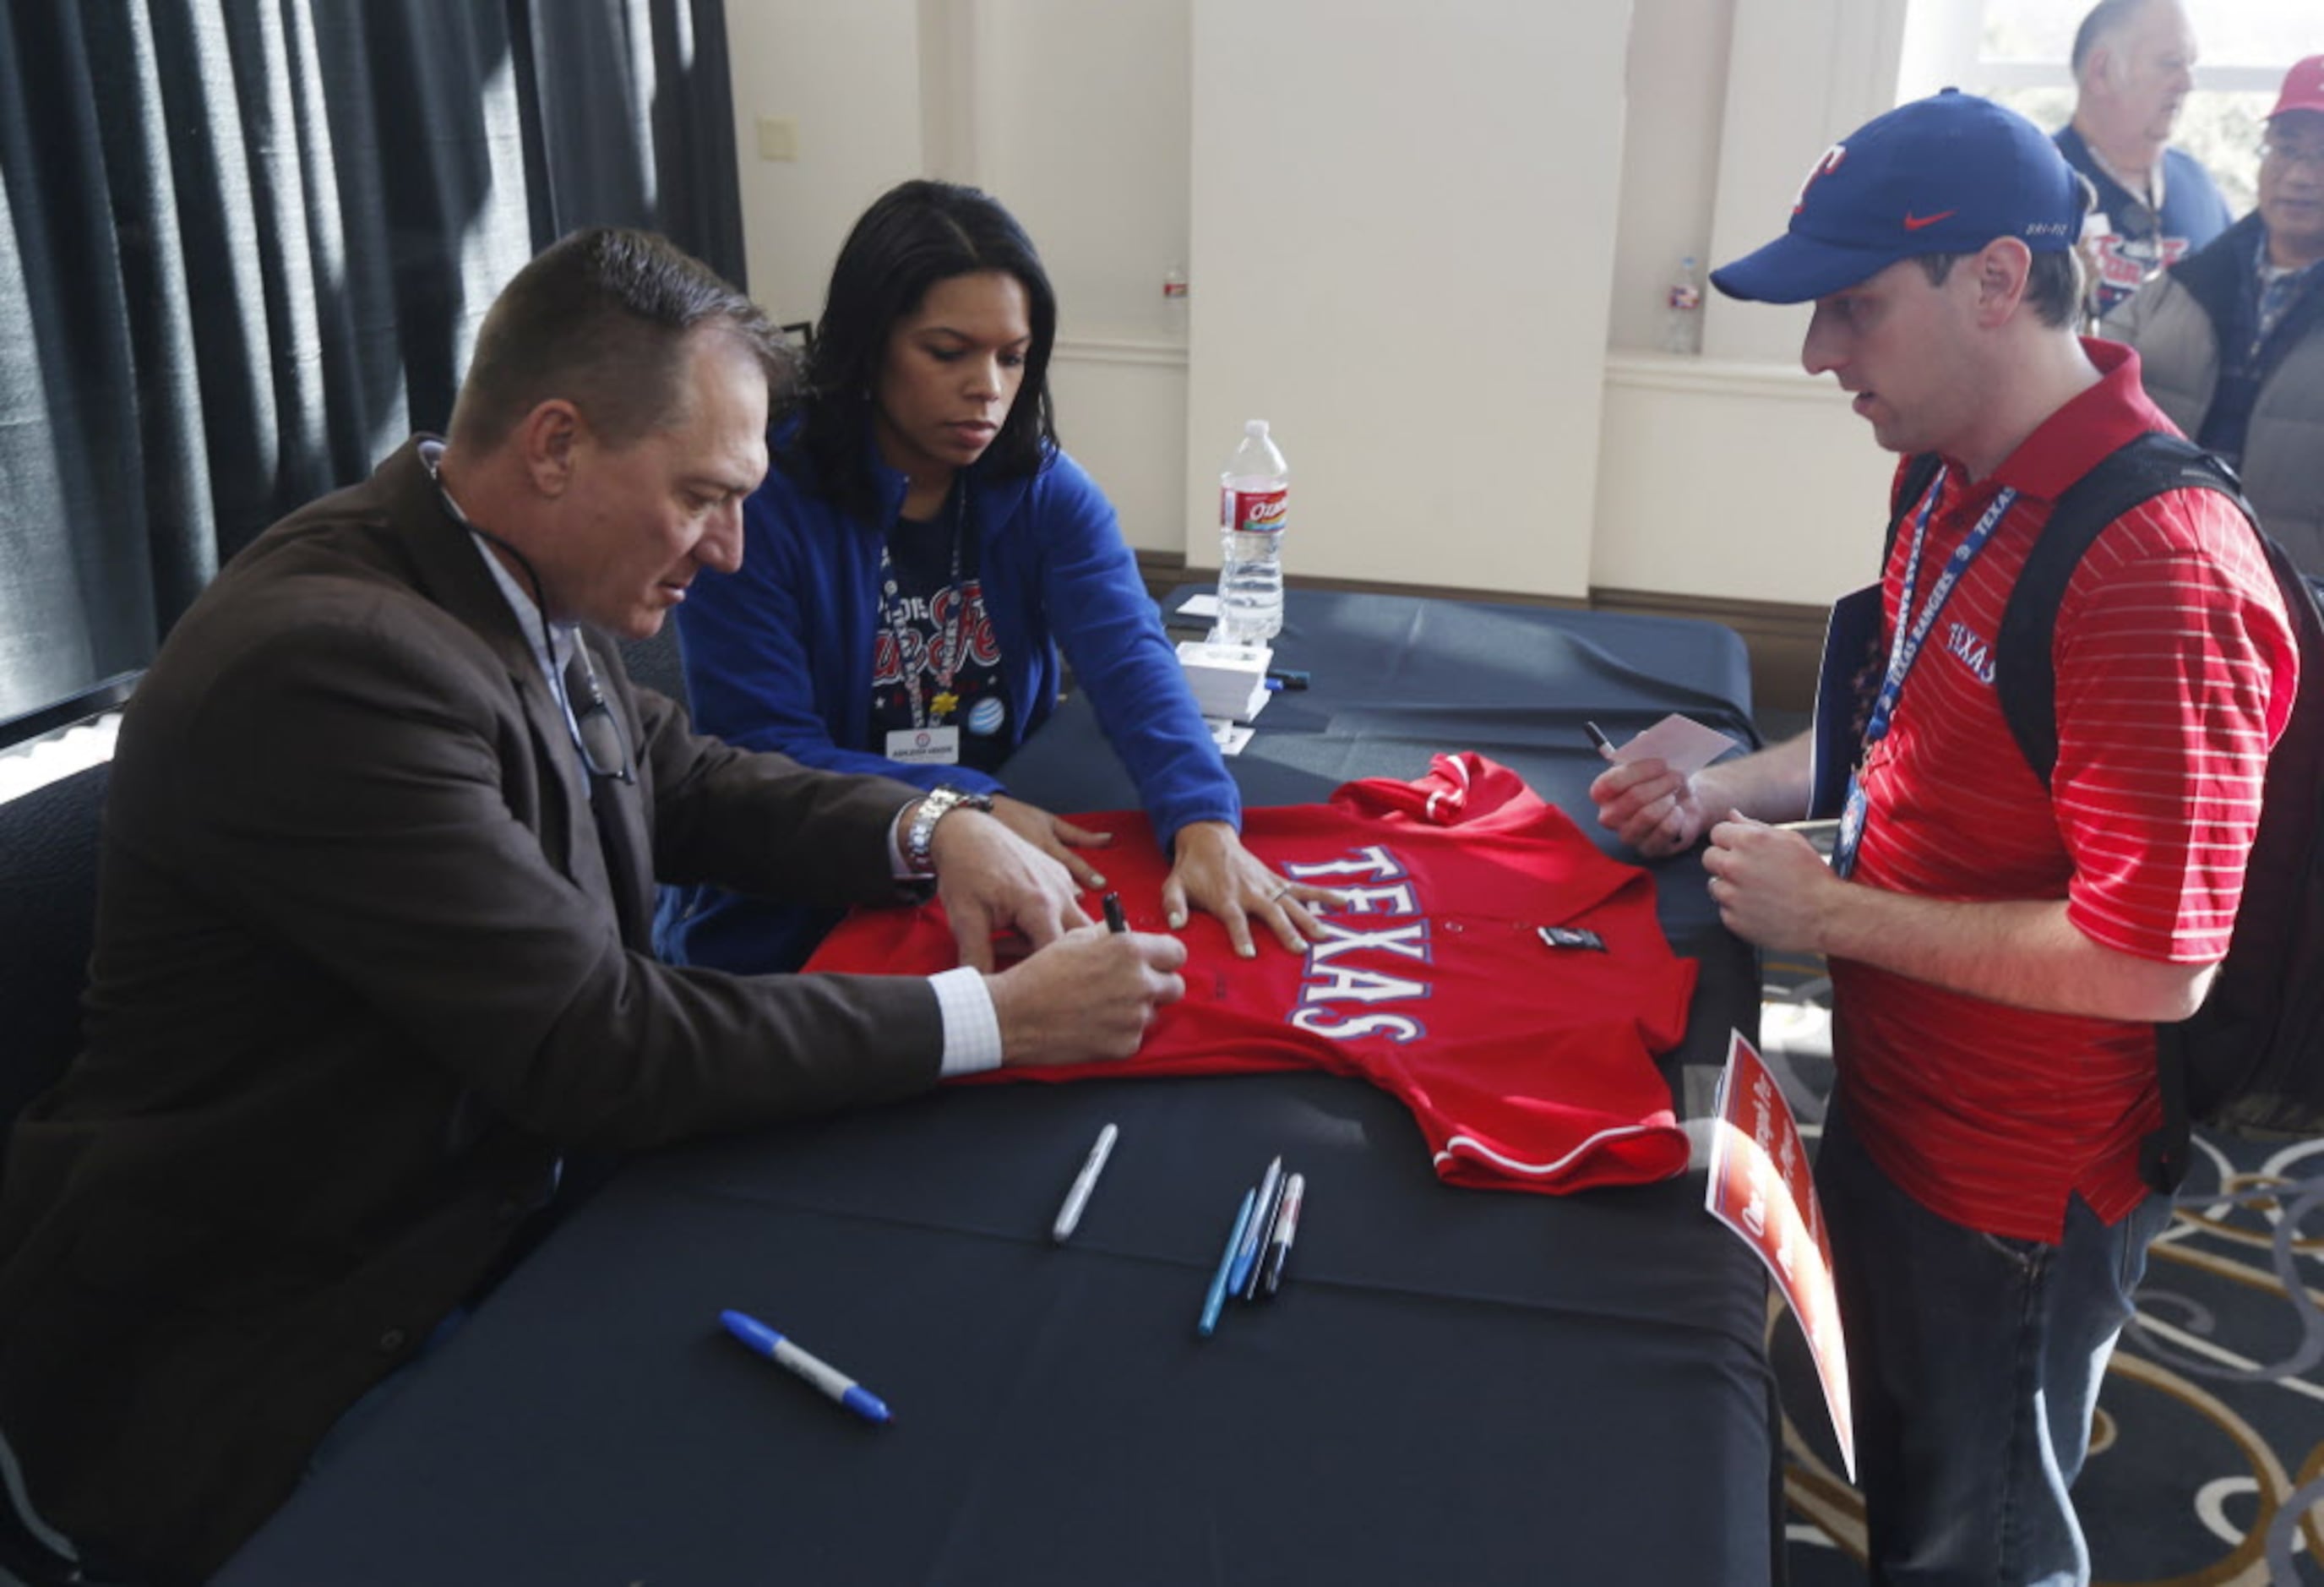 Prince Fielder Signed Autographed Texas Rangers Baseball Jersey